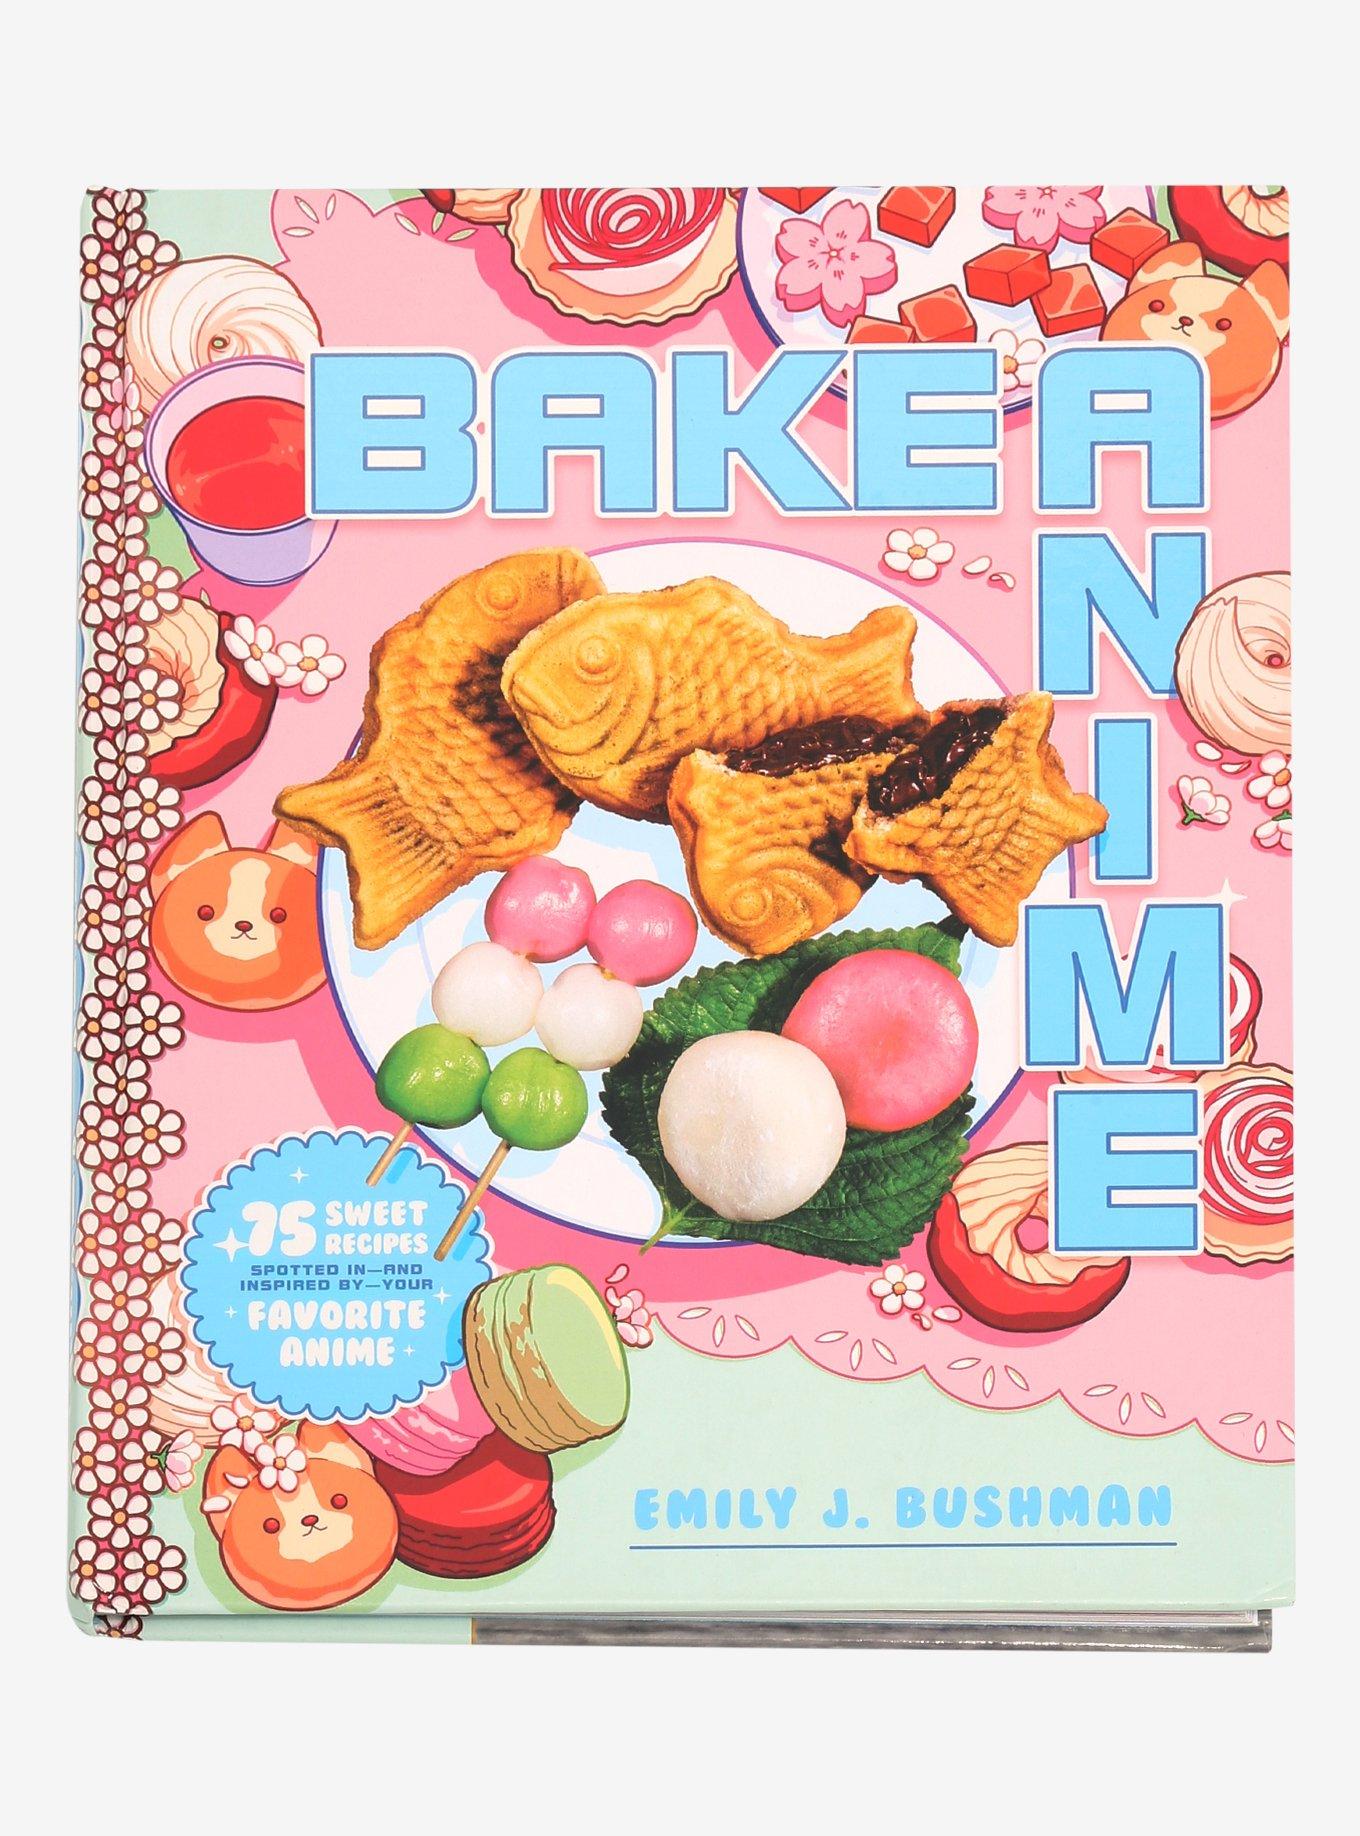 Alice's Wonderland Bakery: Cookie the Cookbook (Board book)